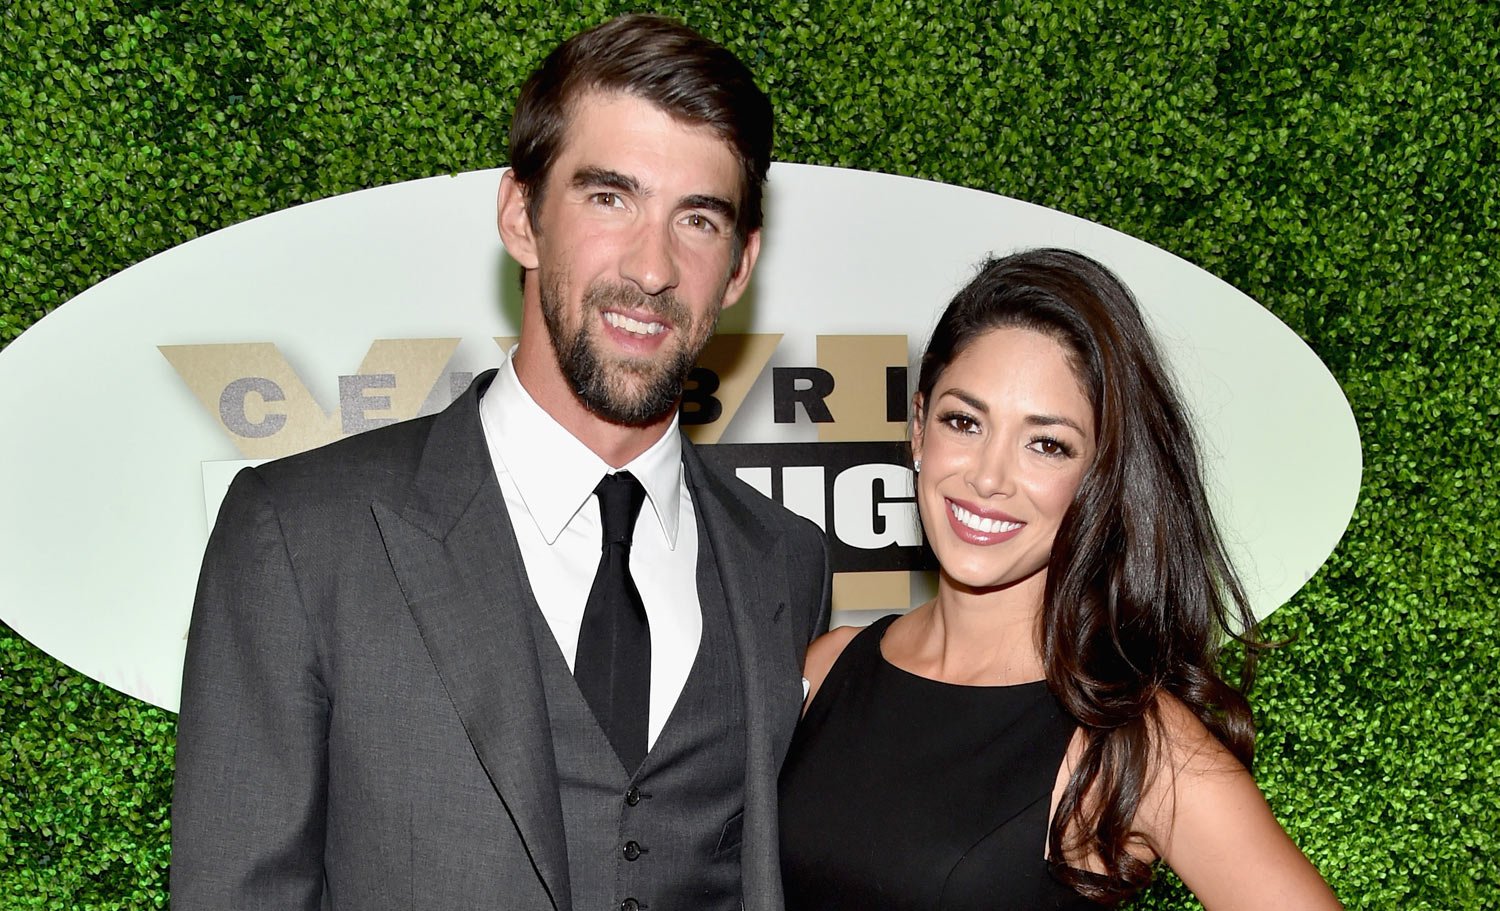 Michael Phelps & Wife Nicole Enjoy Date Night at Celeb Fight Night!